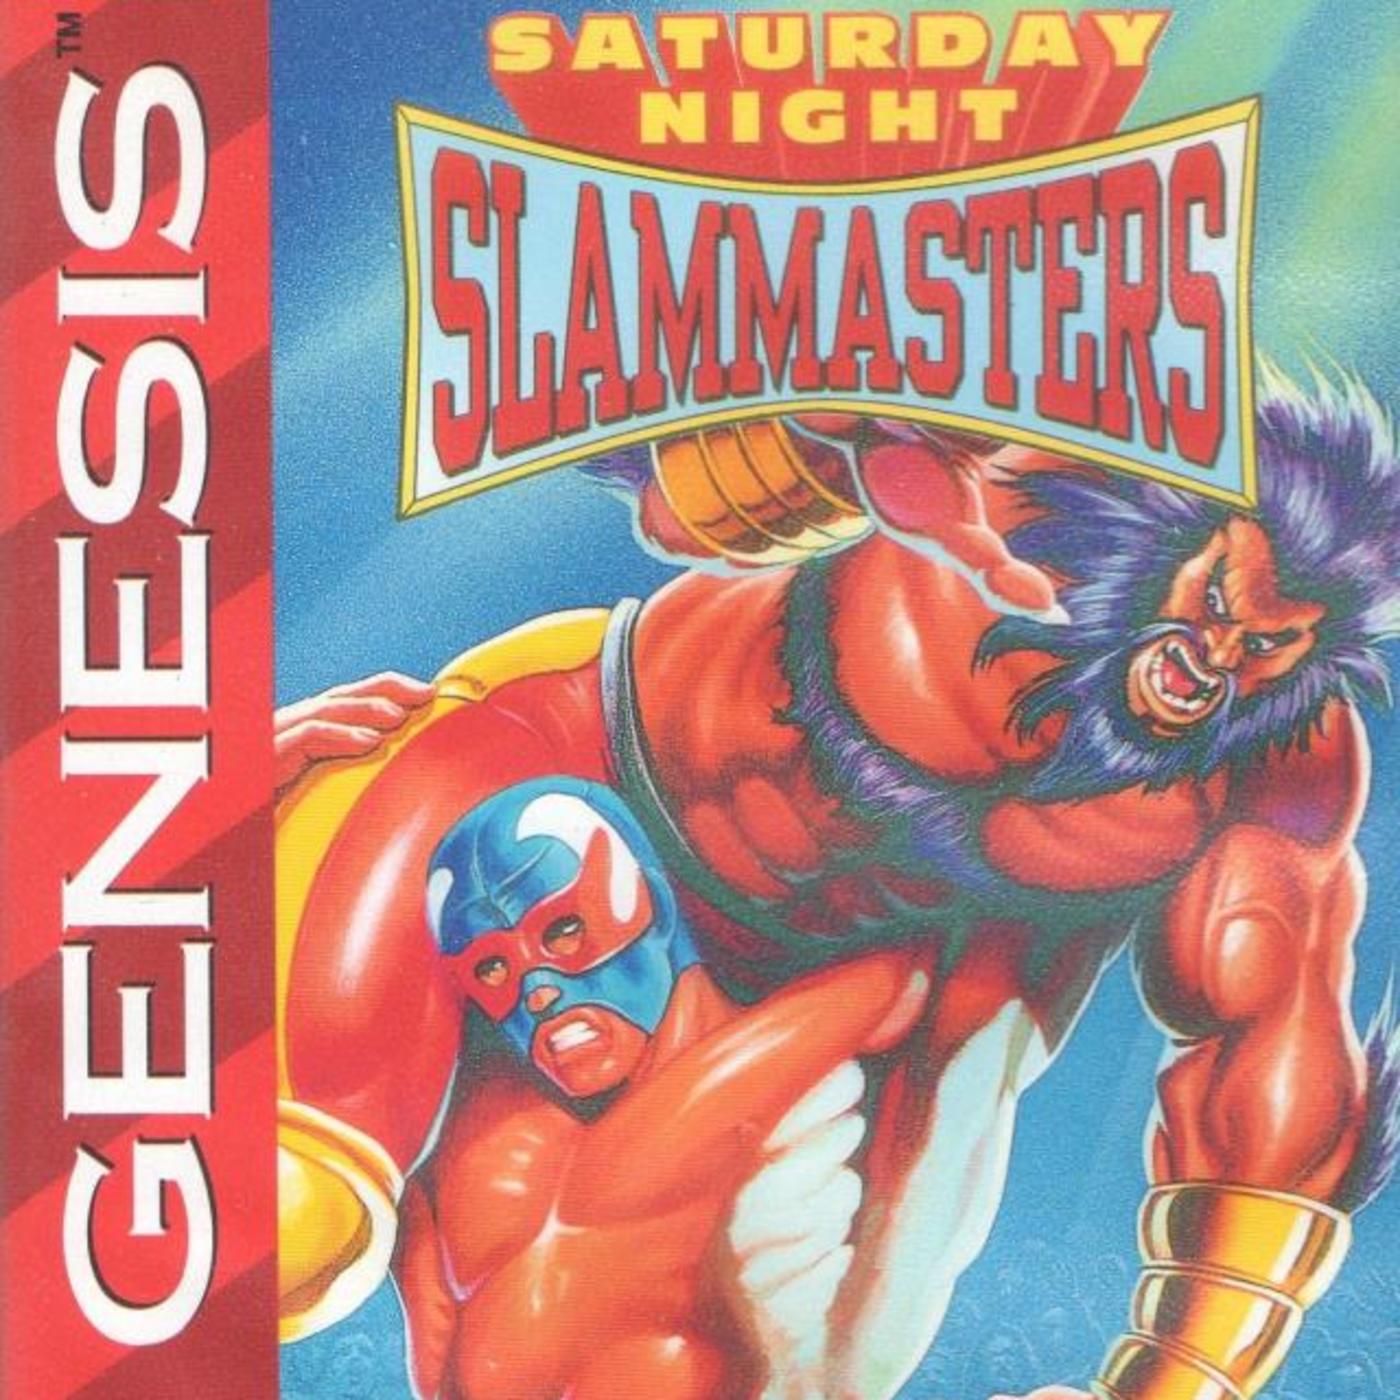 Episode 55 (Saturday Night Slam Masters)